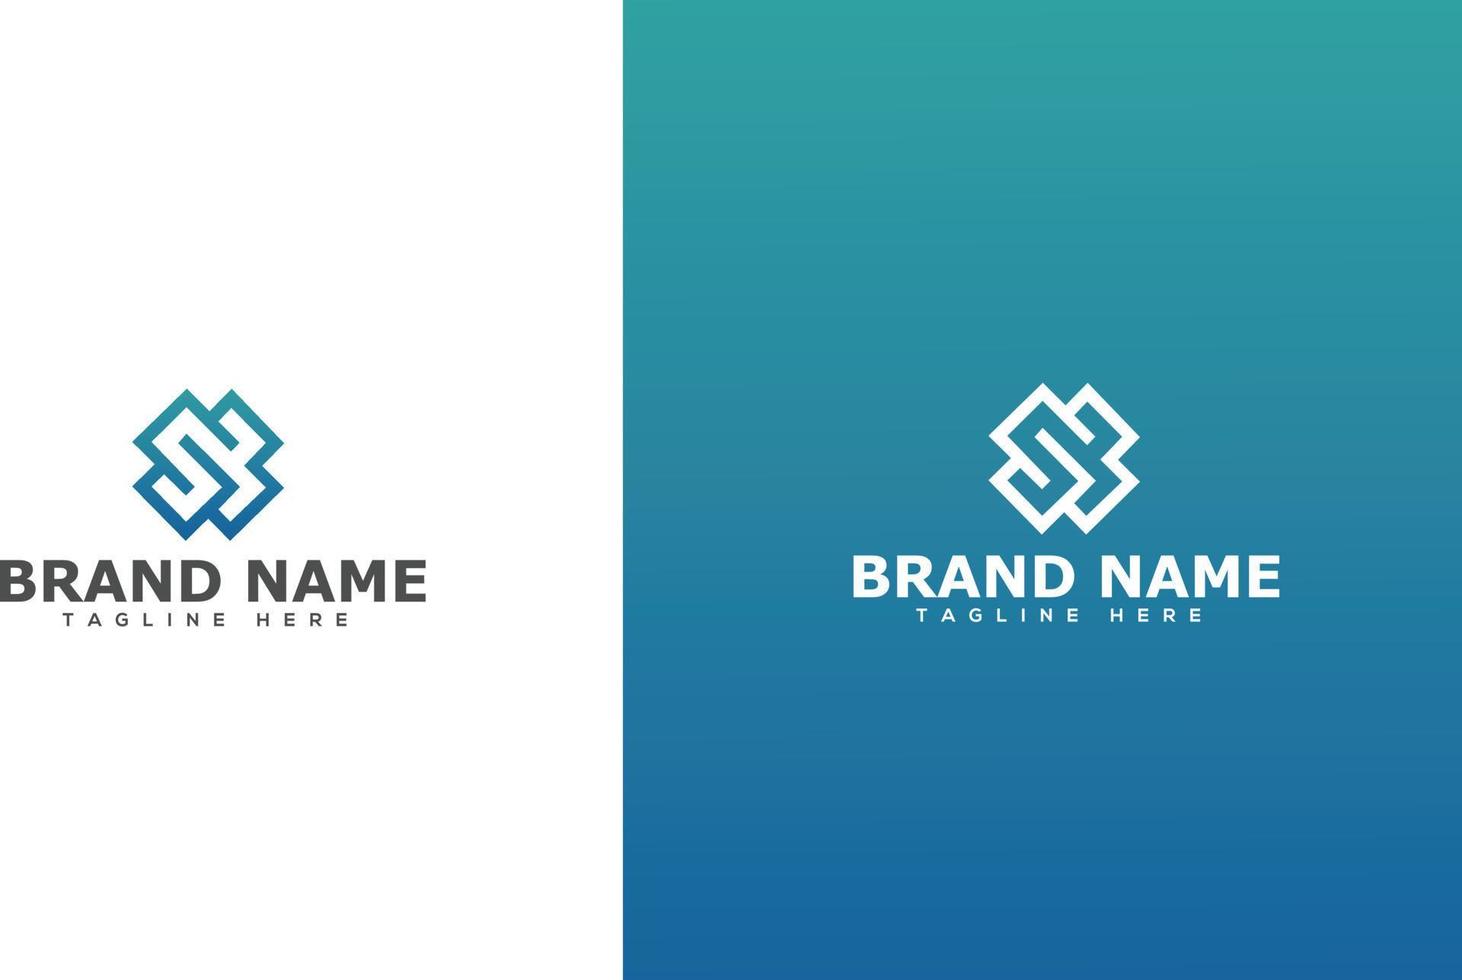 sb-Logo-Design-Vorlage, Vektorgrafik-Branding-Element vektor